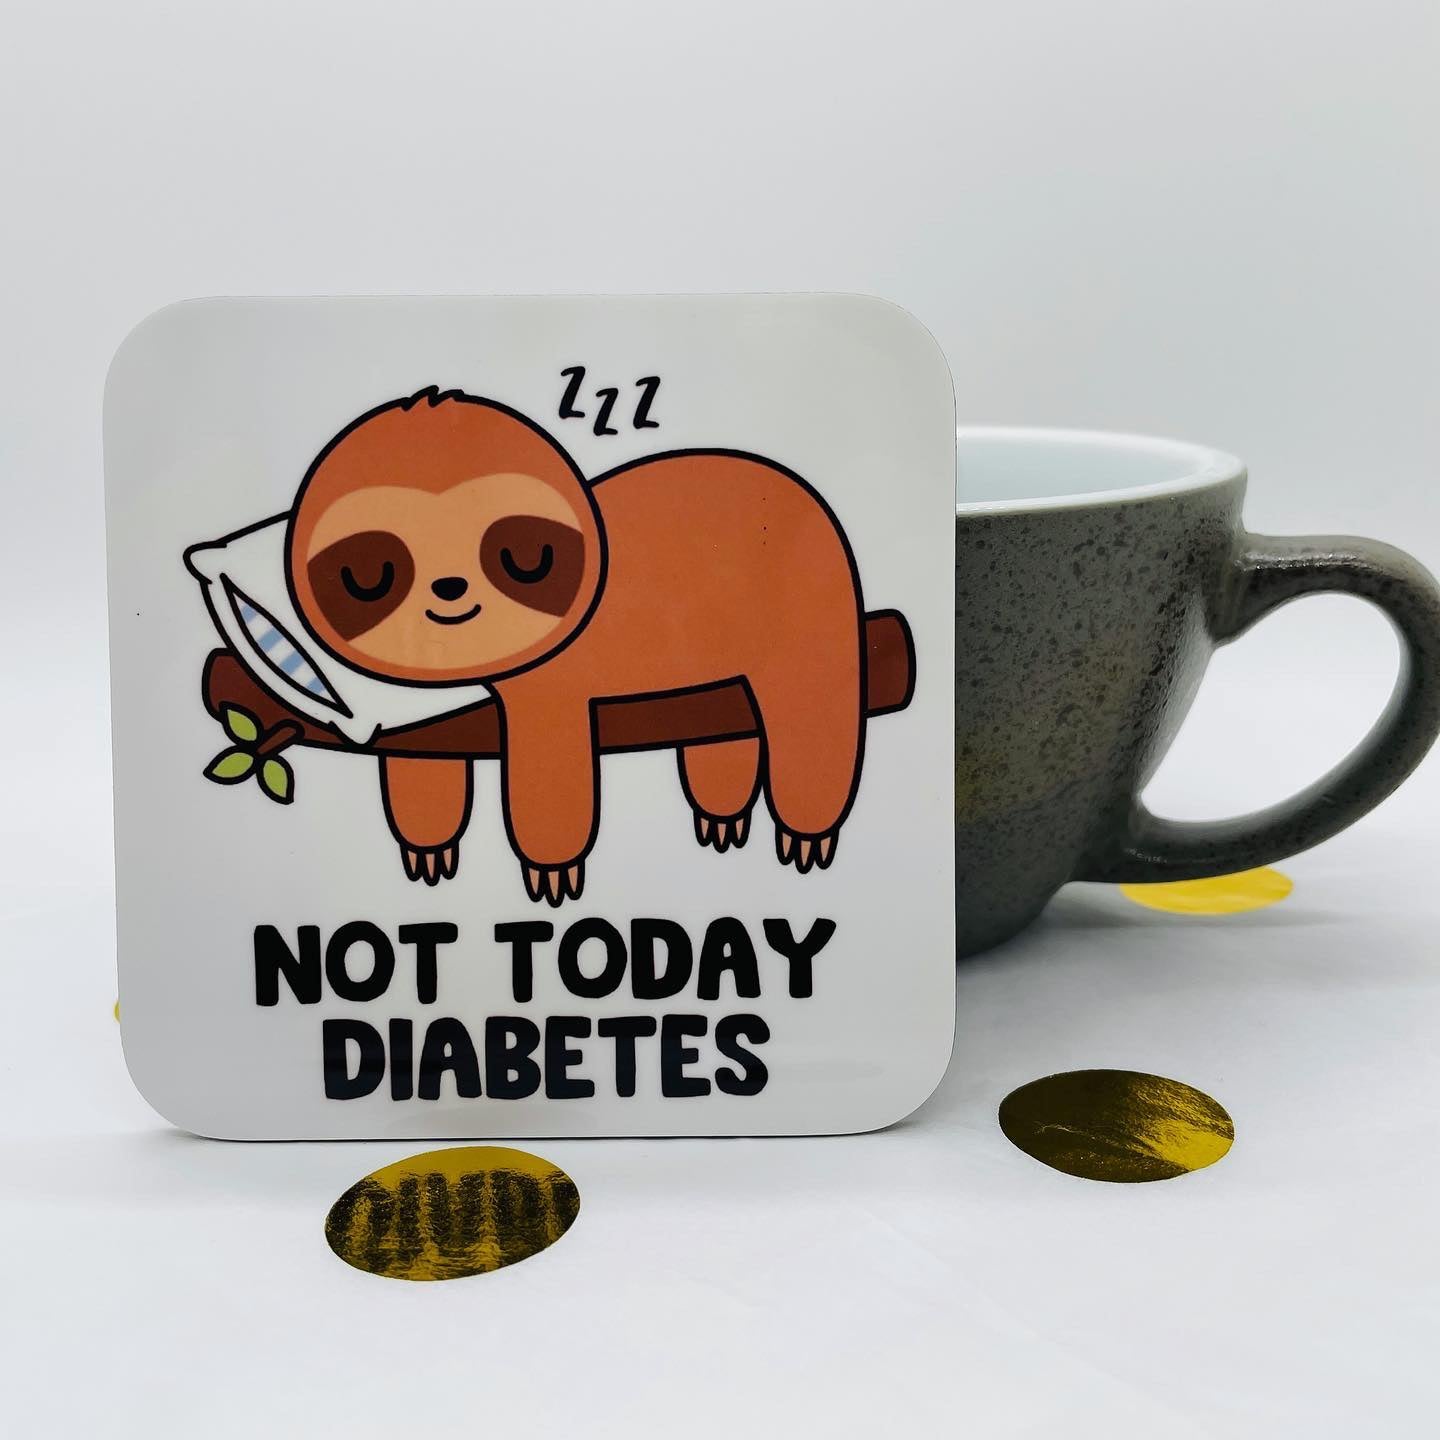 Not Today Diabetes (Sloth) Coaster